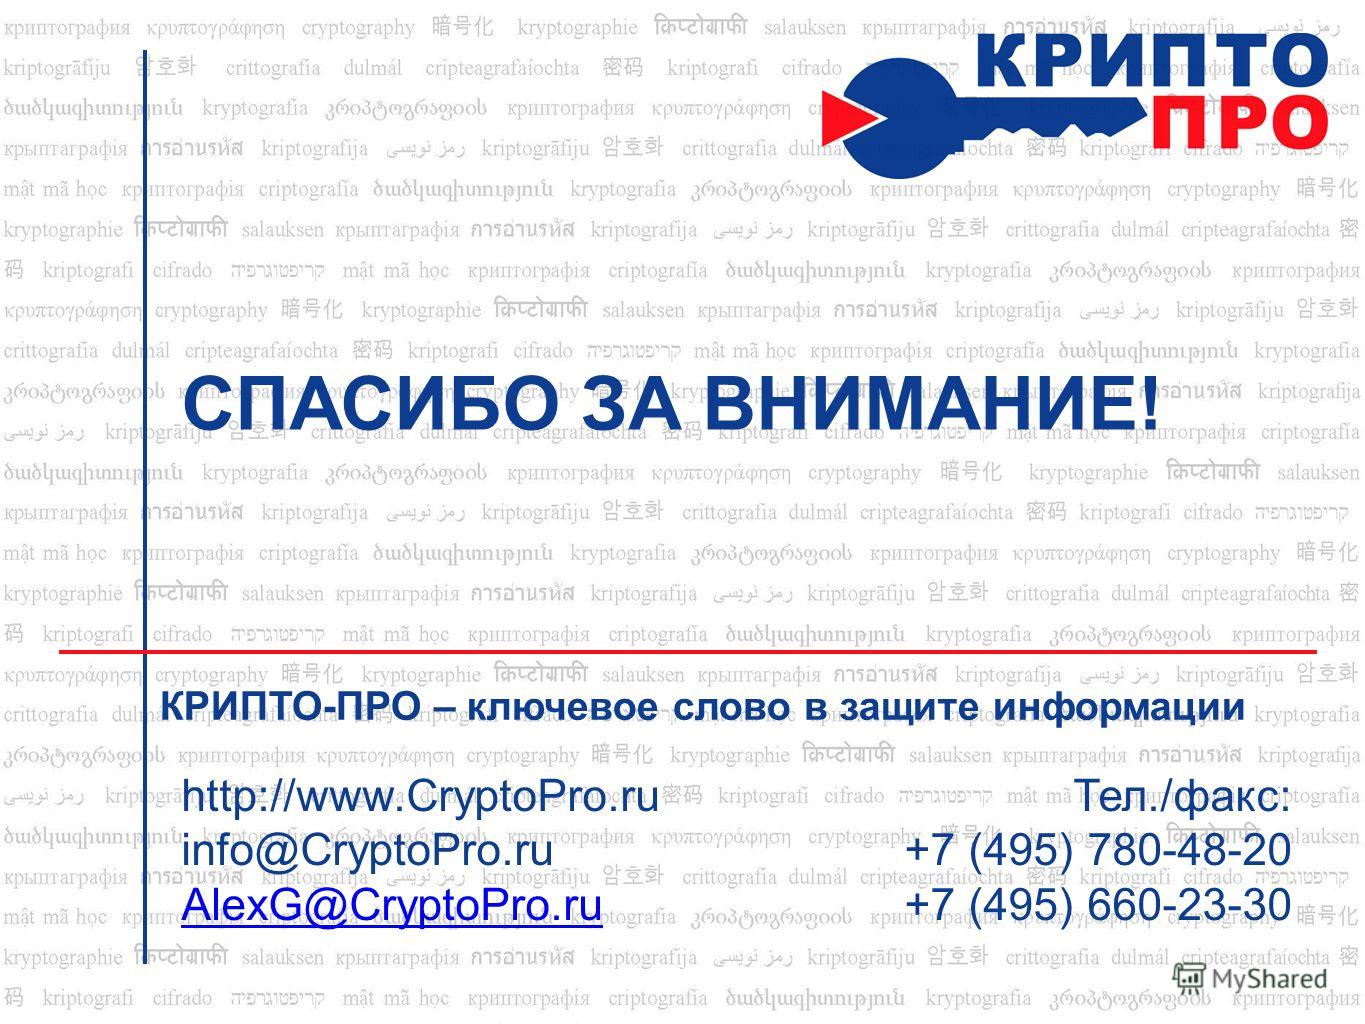 КРИПТО-ПРО – ключевое слово в защите информации http://www.CryptoPro.ru info@CryptoPro.ru AlexG@CryptoPro.ru Тел./факс: +7 (495) 780-48-20 +7 (495) 660-23-30 СПАСИБО ЗА ВНИМАНИЕ!